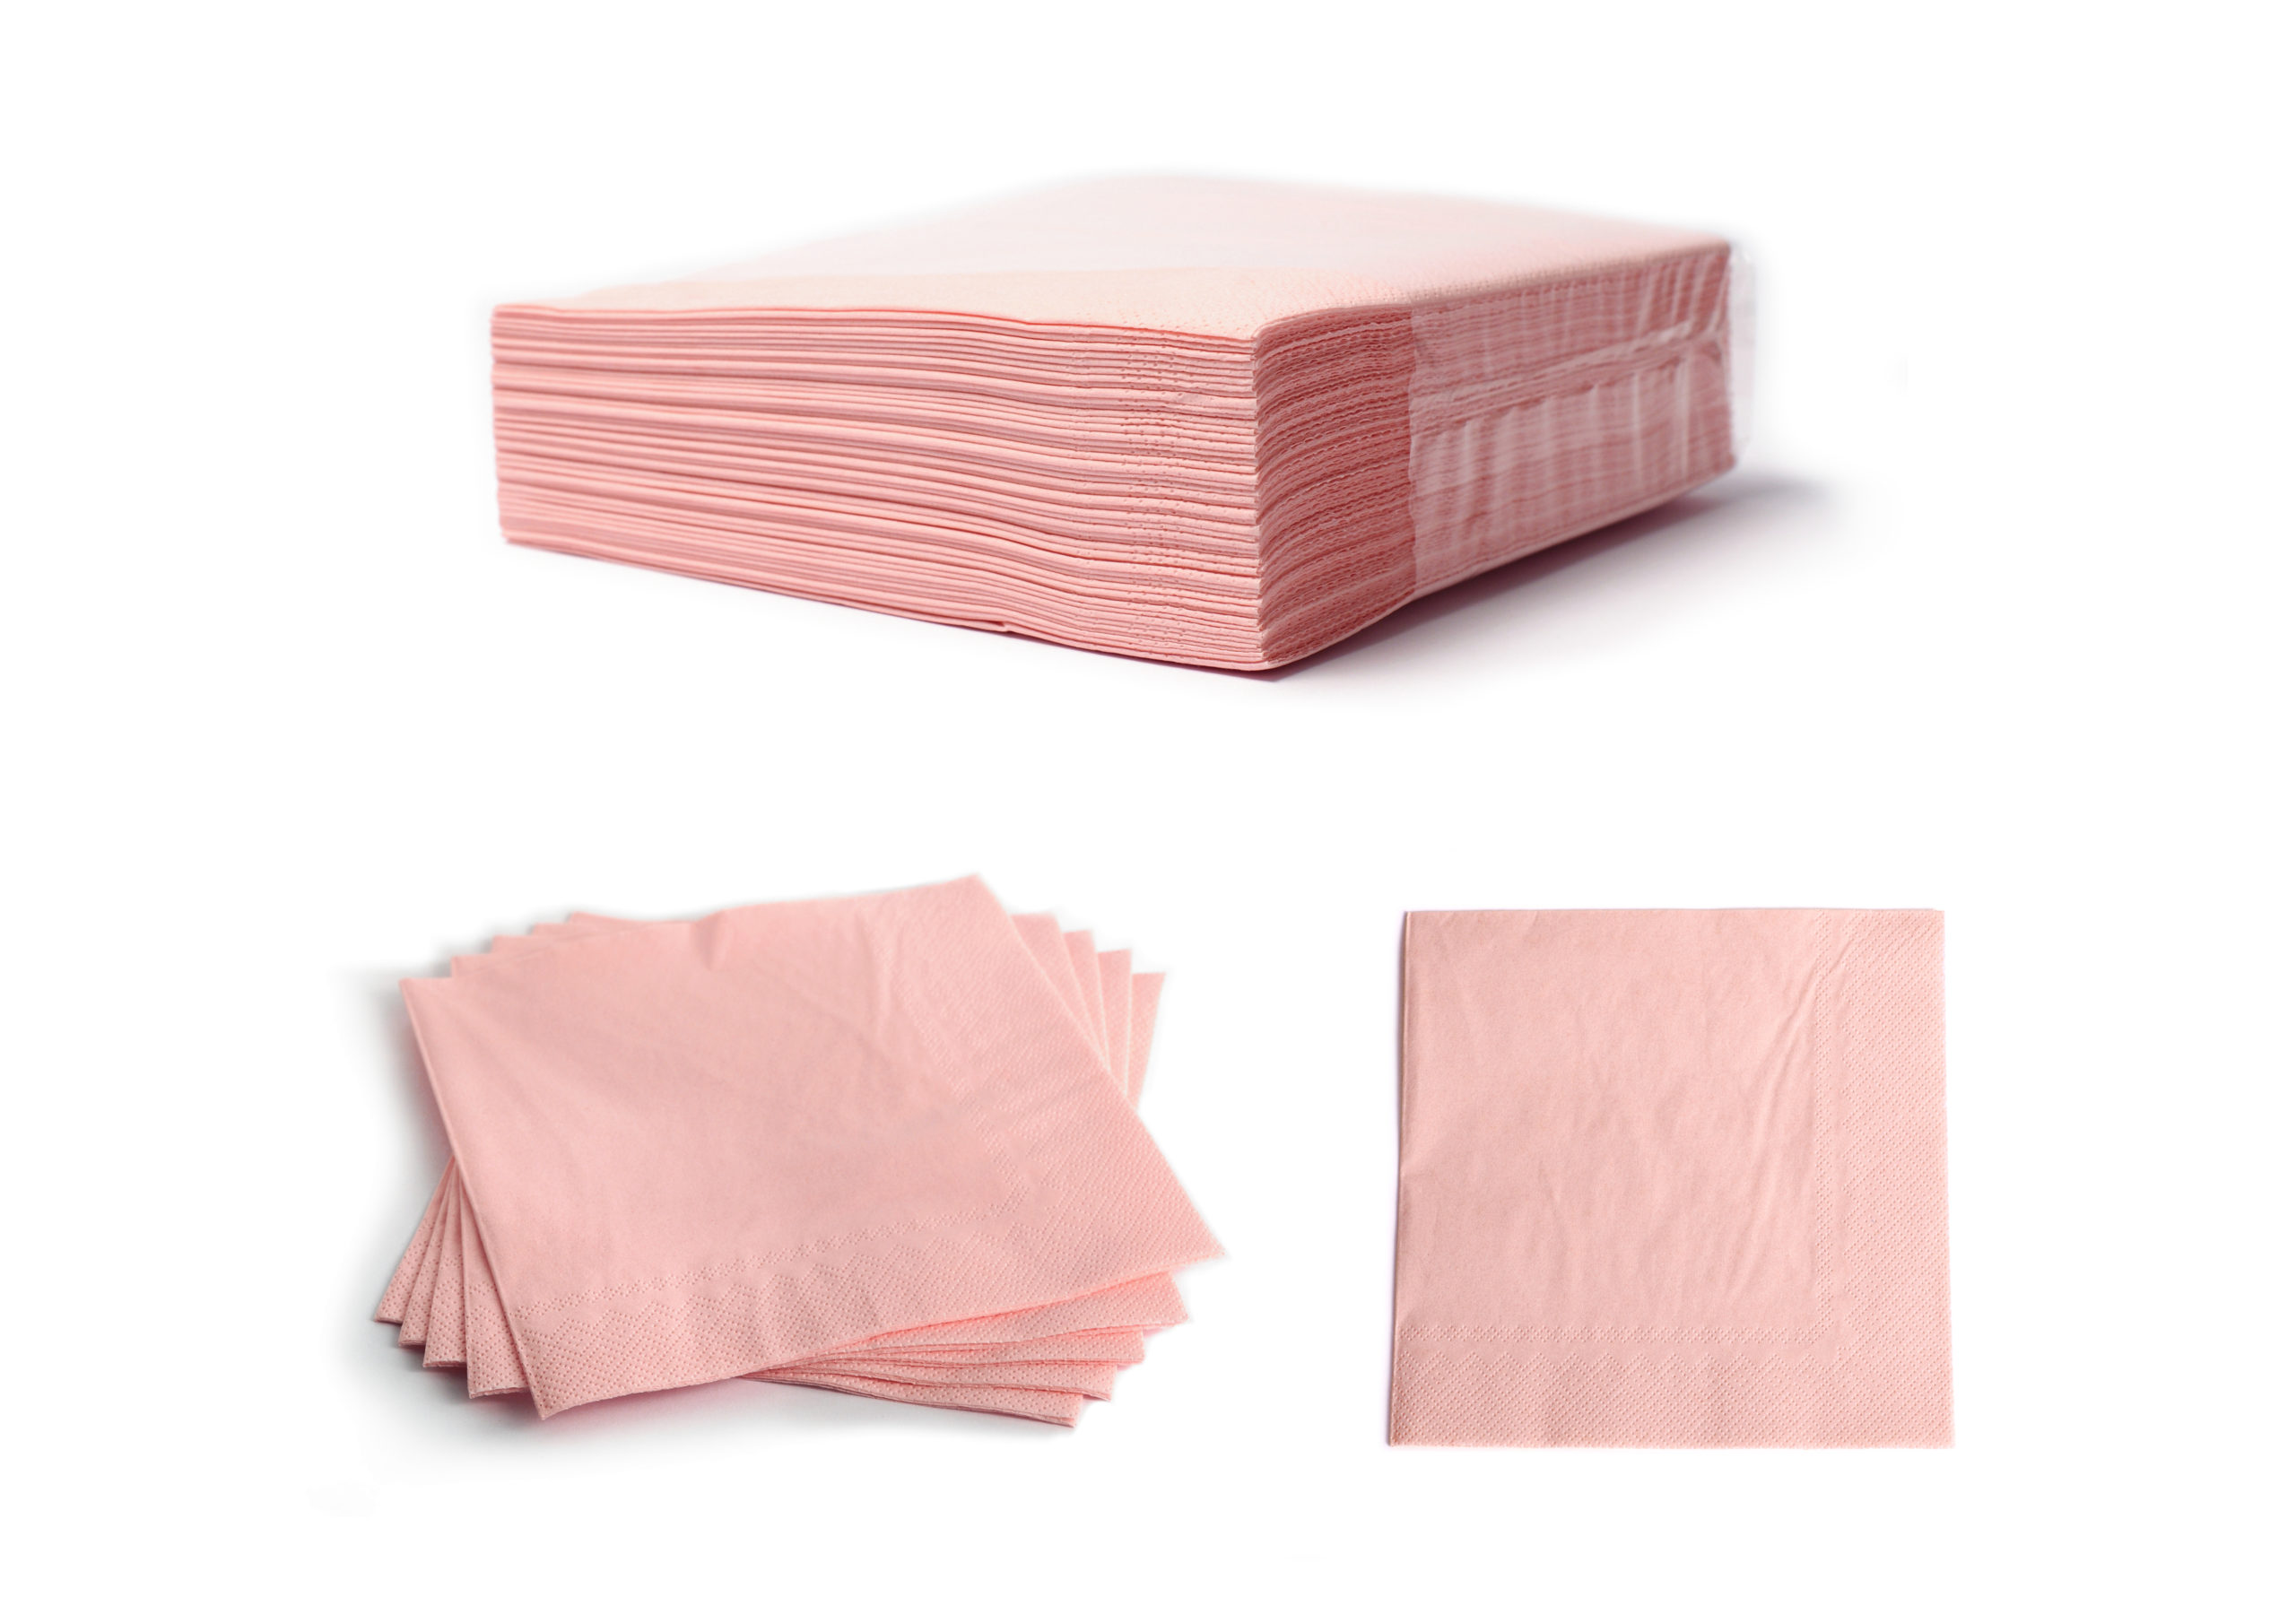 33x33cm- ZELLSTOFF- 1/4 Falz- 2-lagig – pink